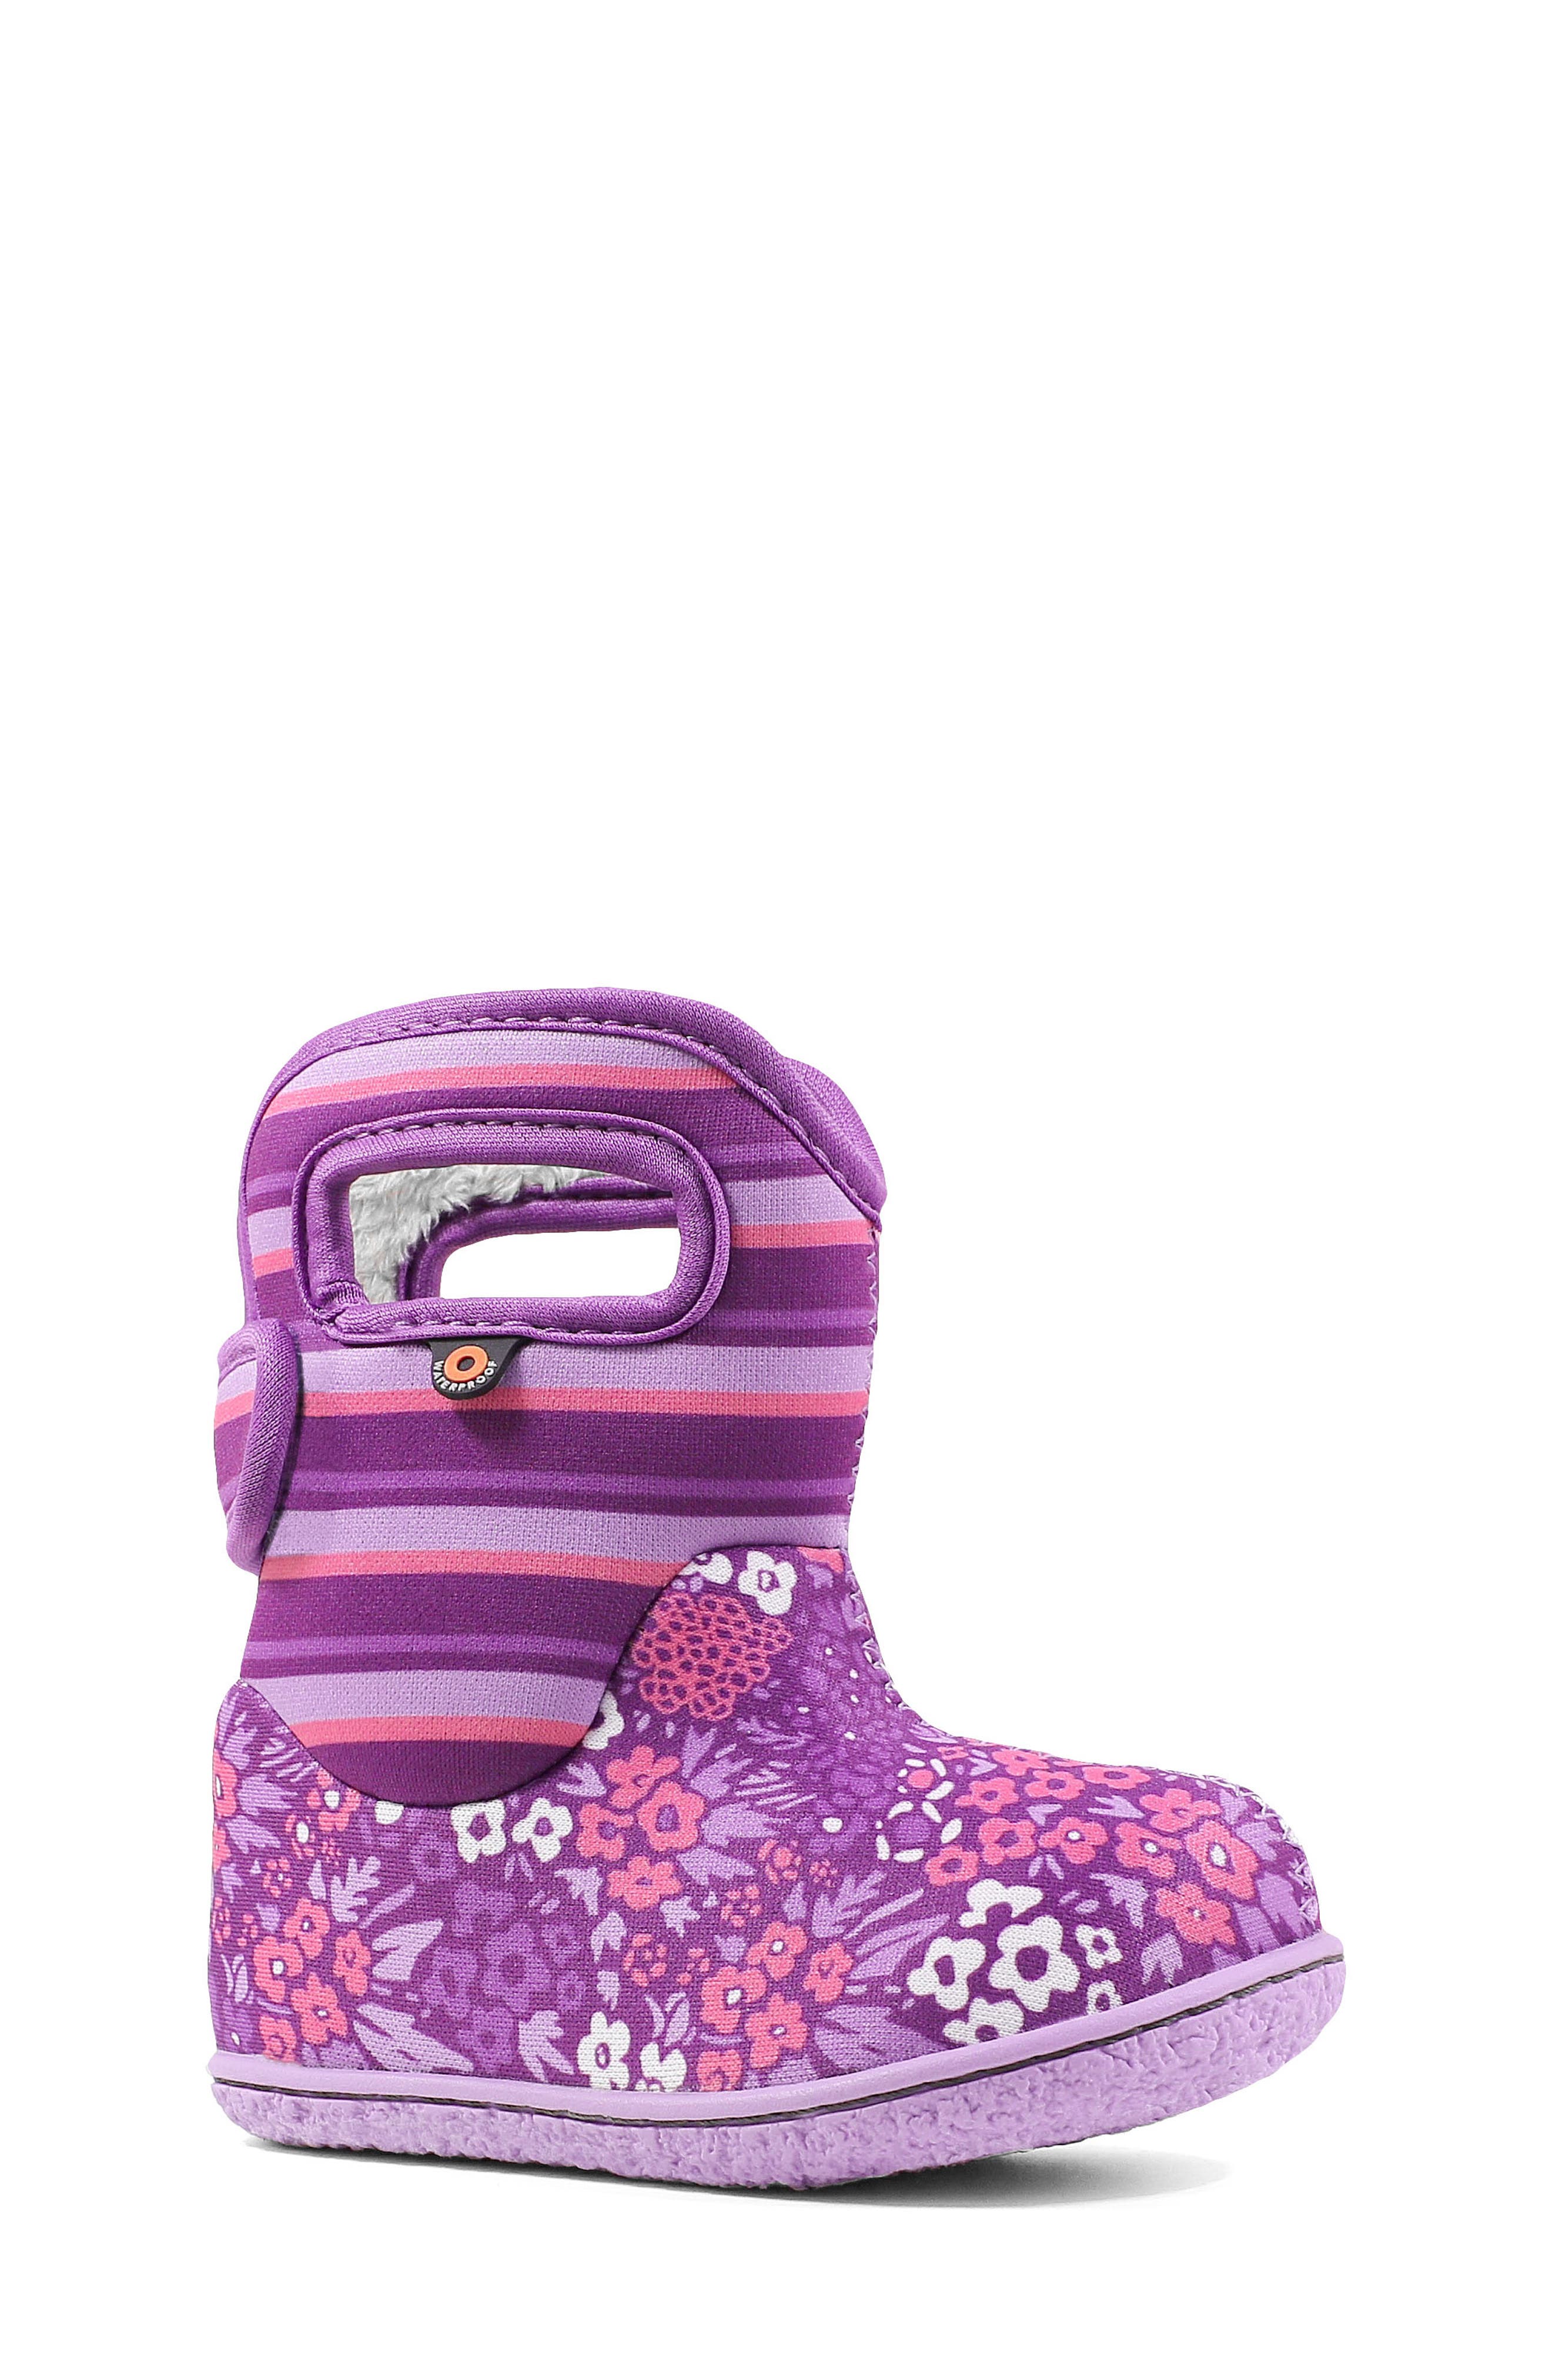 Toddler Girls' Bogs Shoes (Sizes 7.5-12) | Nordstrom